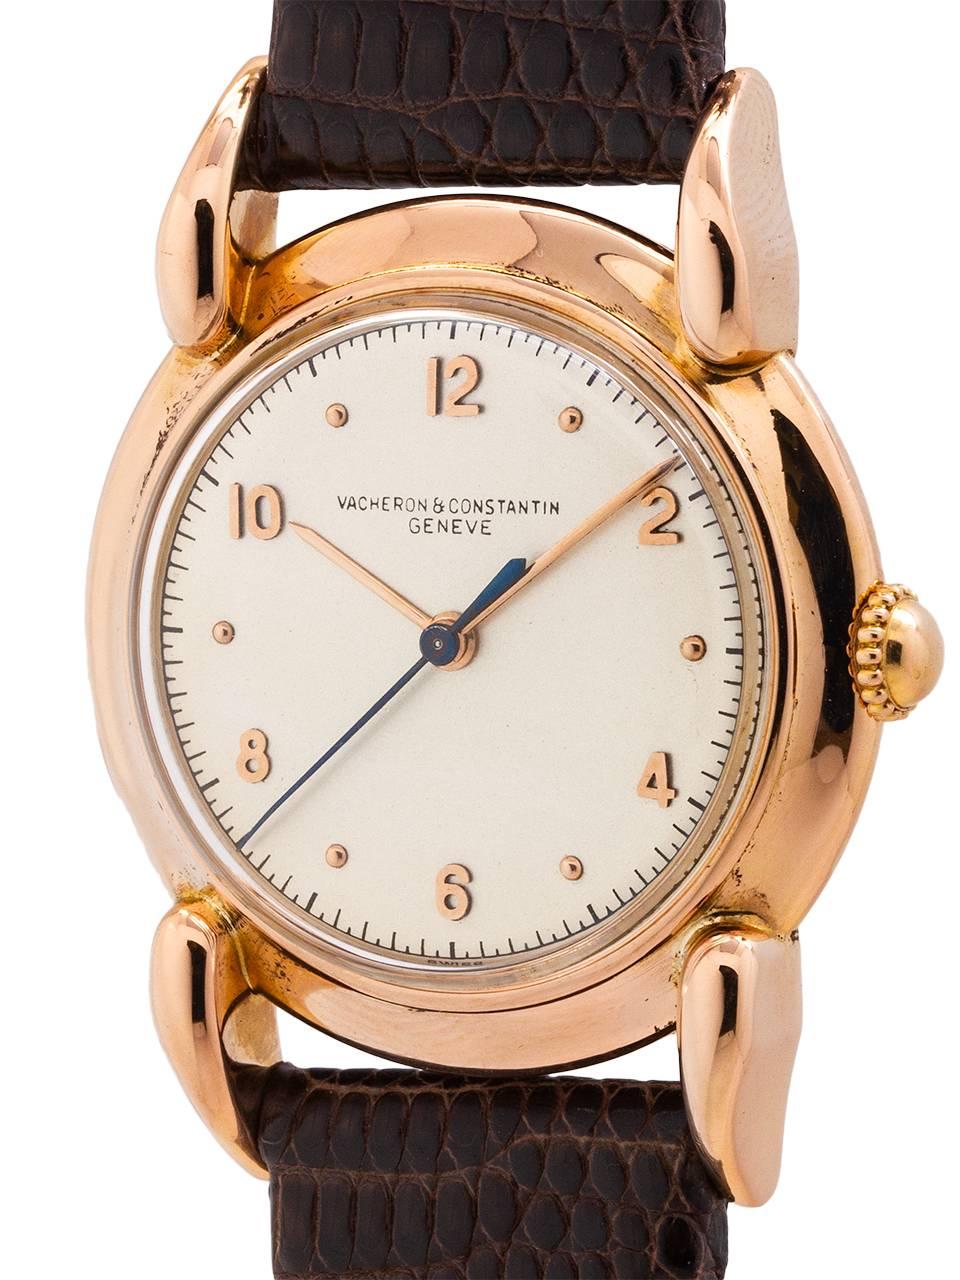 Retro Vacheron & Constantin Pink Gold Manual Wristwatch, circa 1950s